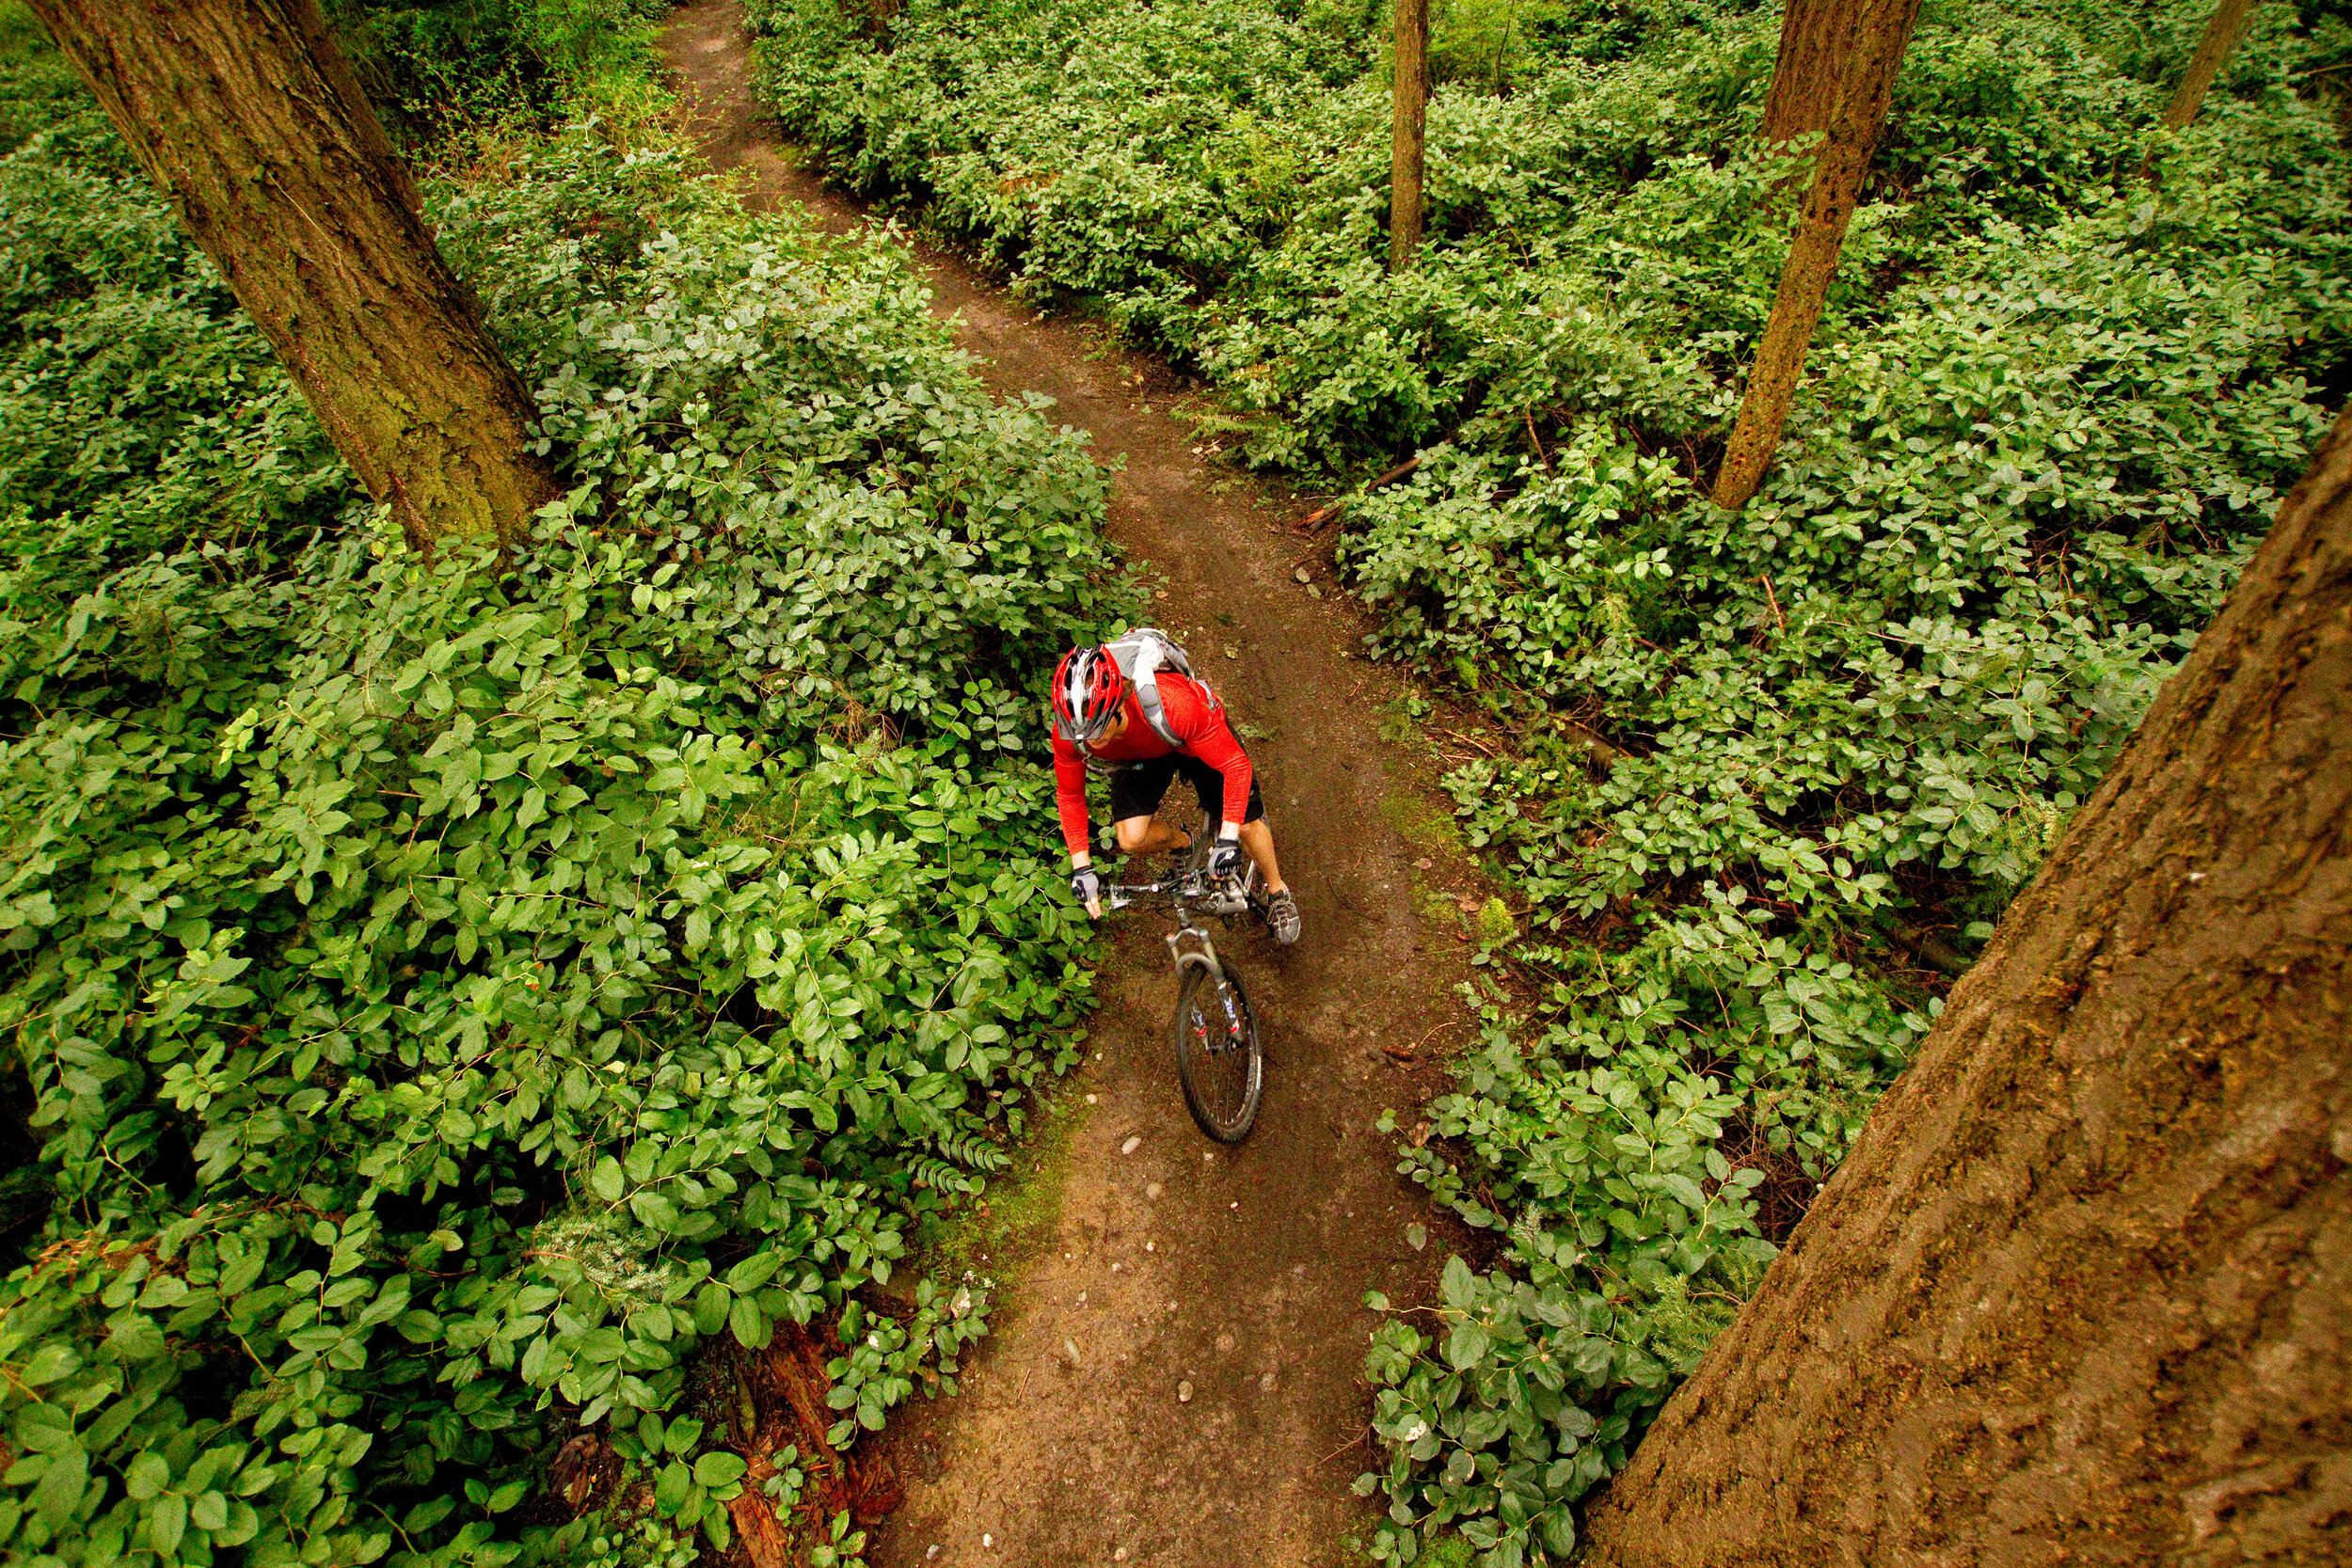  Adventure: Joe Bauer mountain biking through a forest, Big Finn Hill 